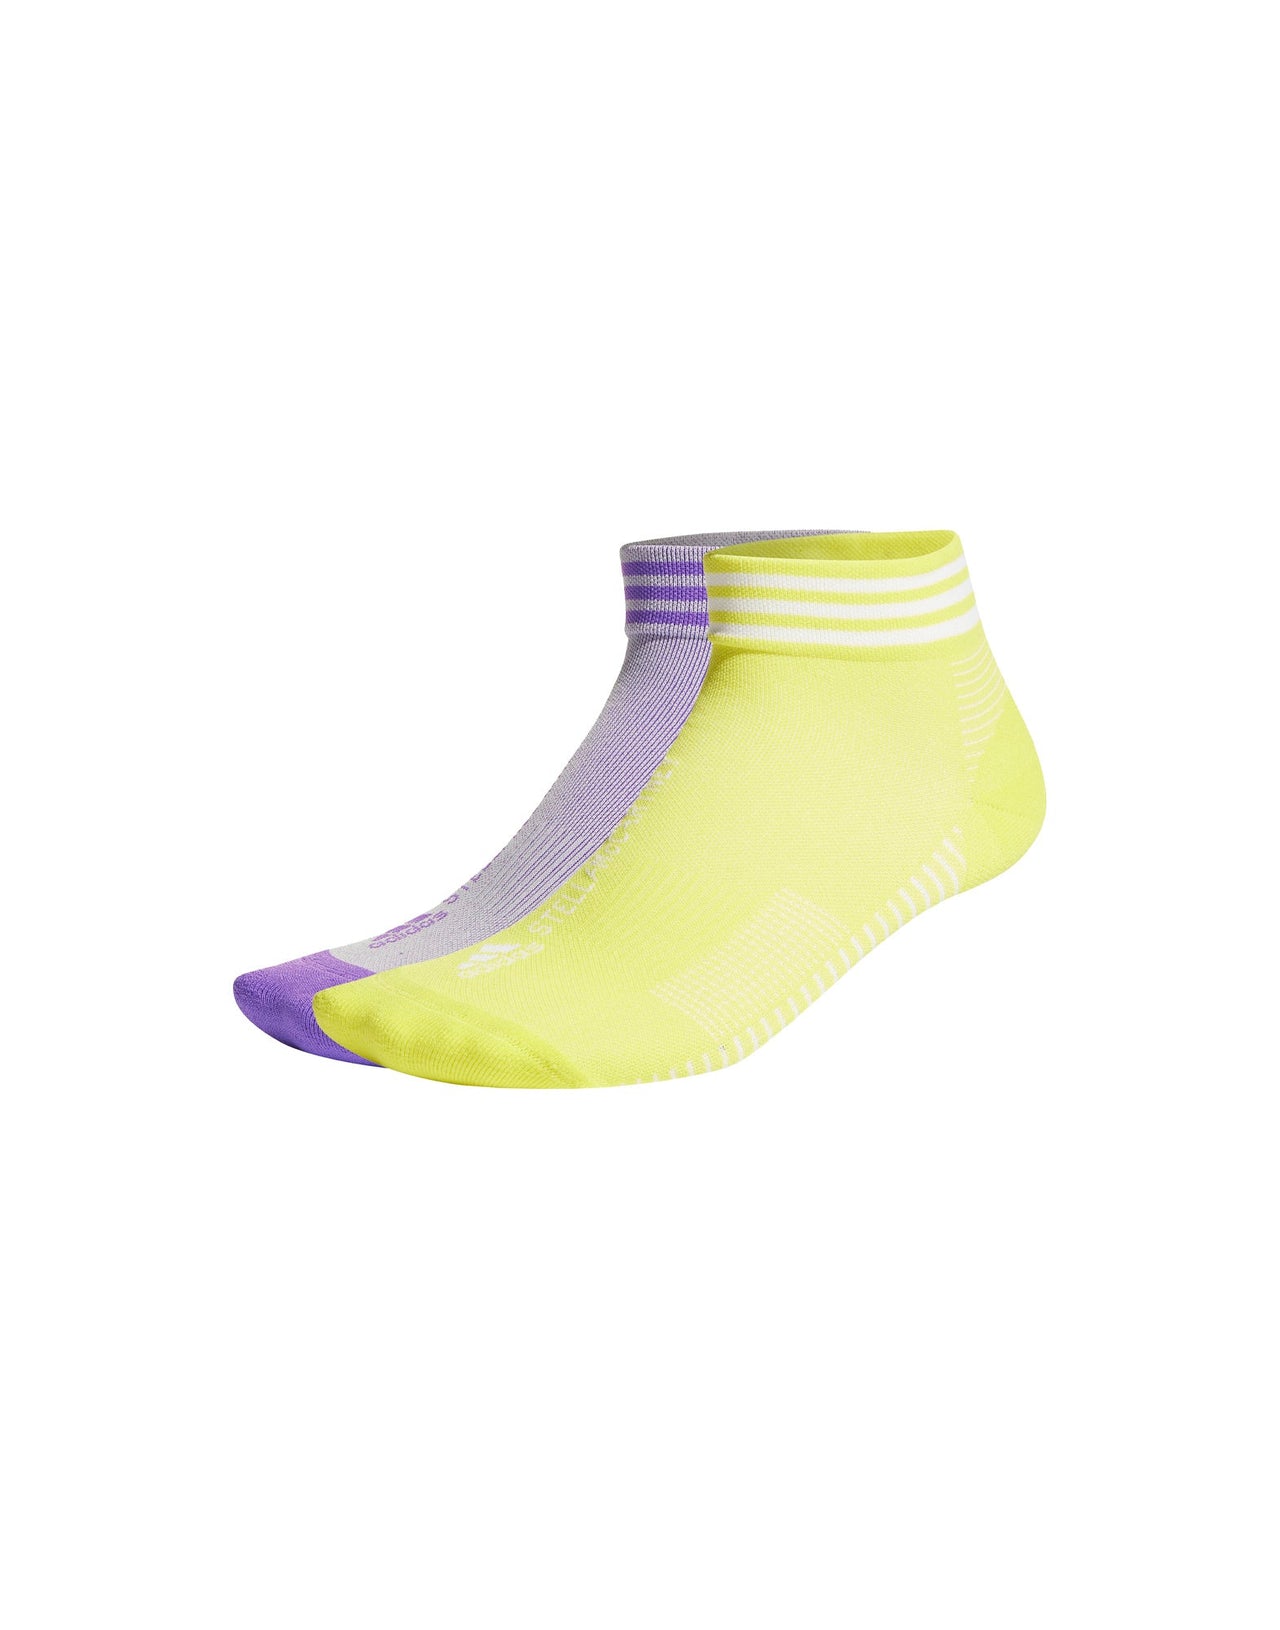 Adidas by Stella McCartney sock Sport Yellow and Viola